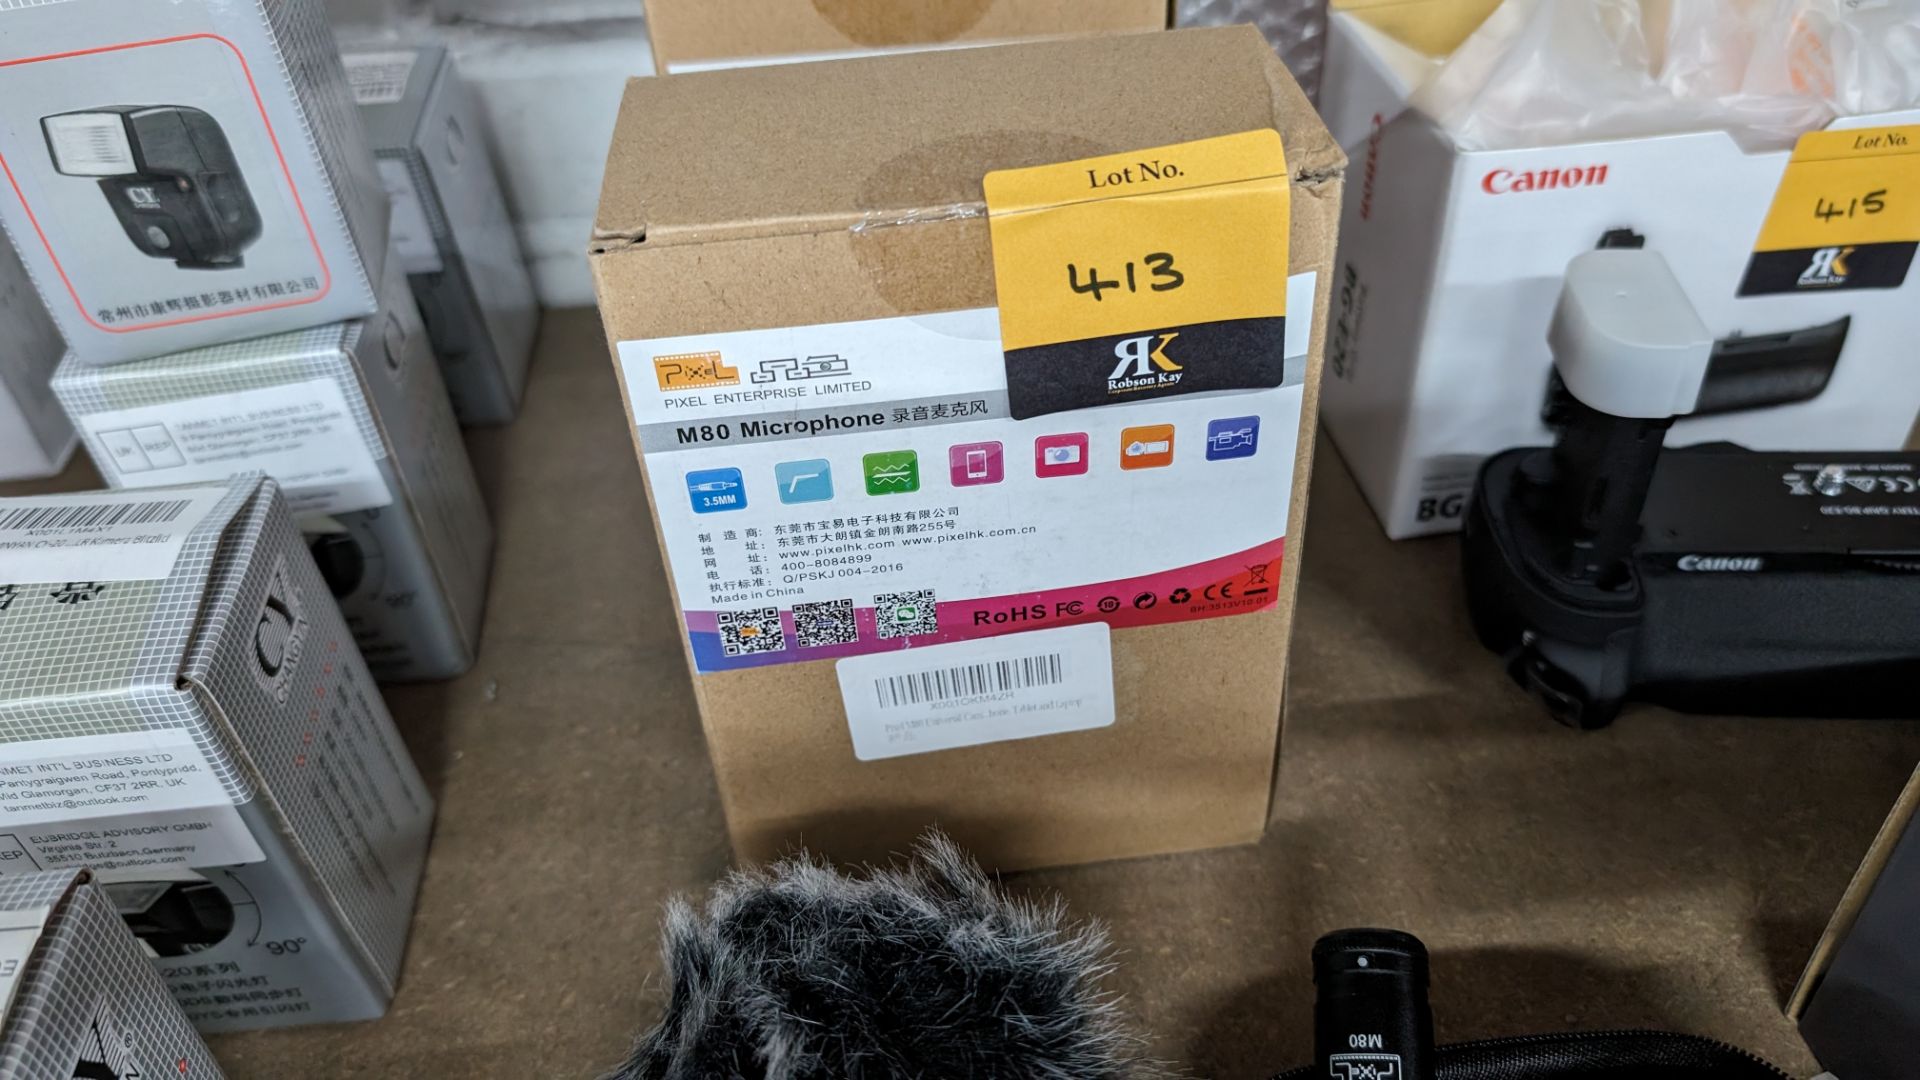 2 off Pixel Enterprise model M80 microphone kits - Image 10 of 16